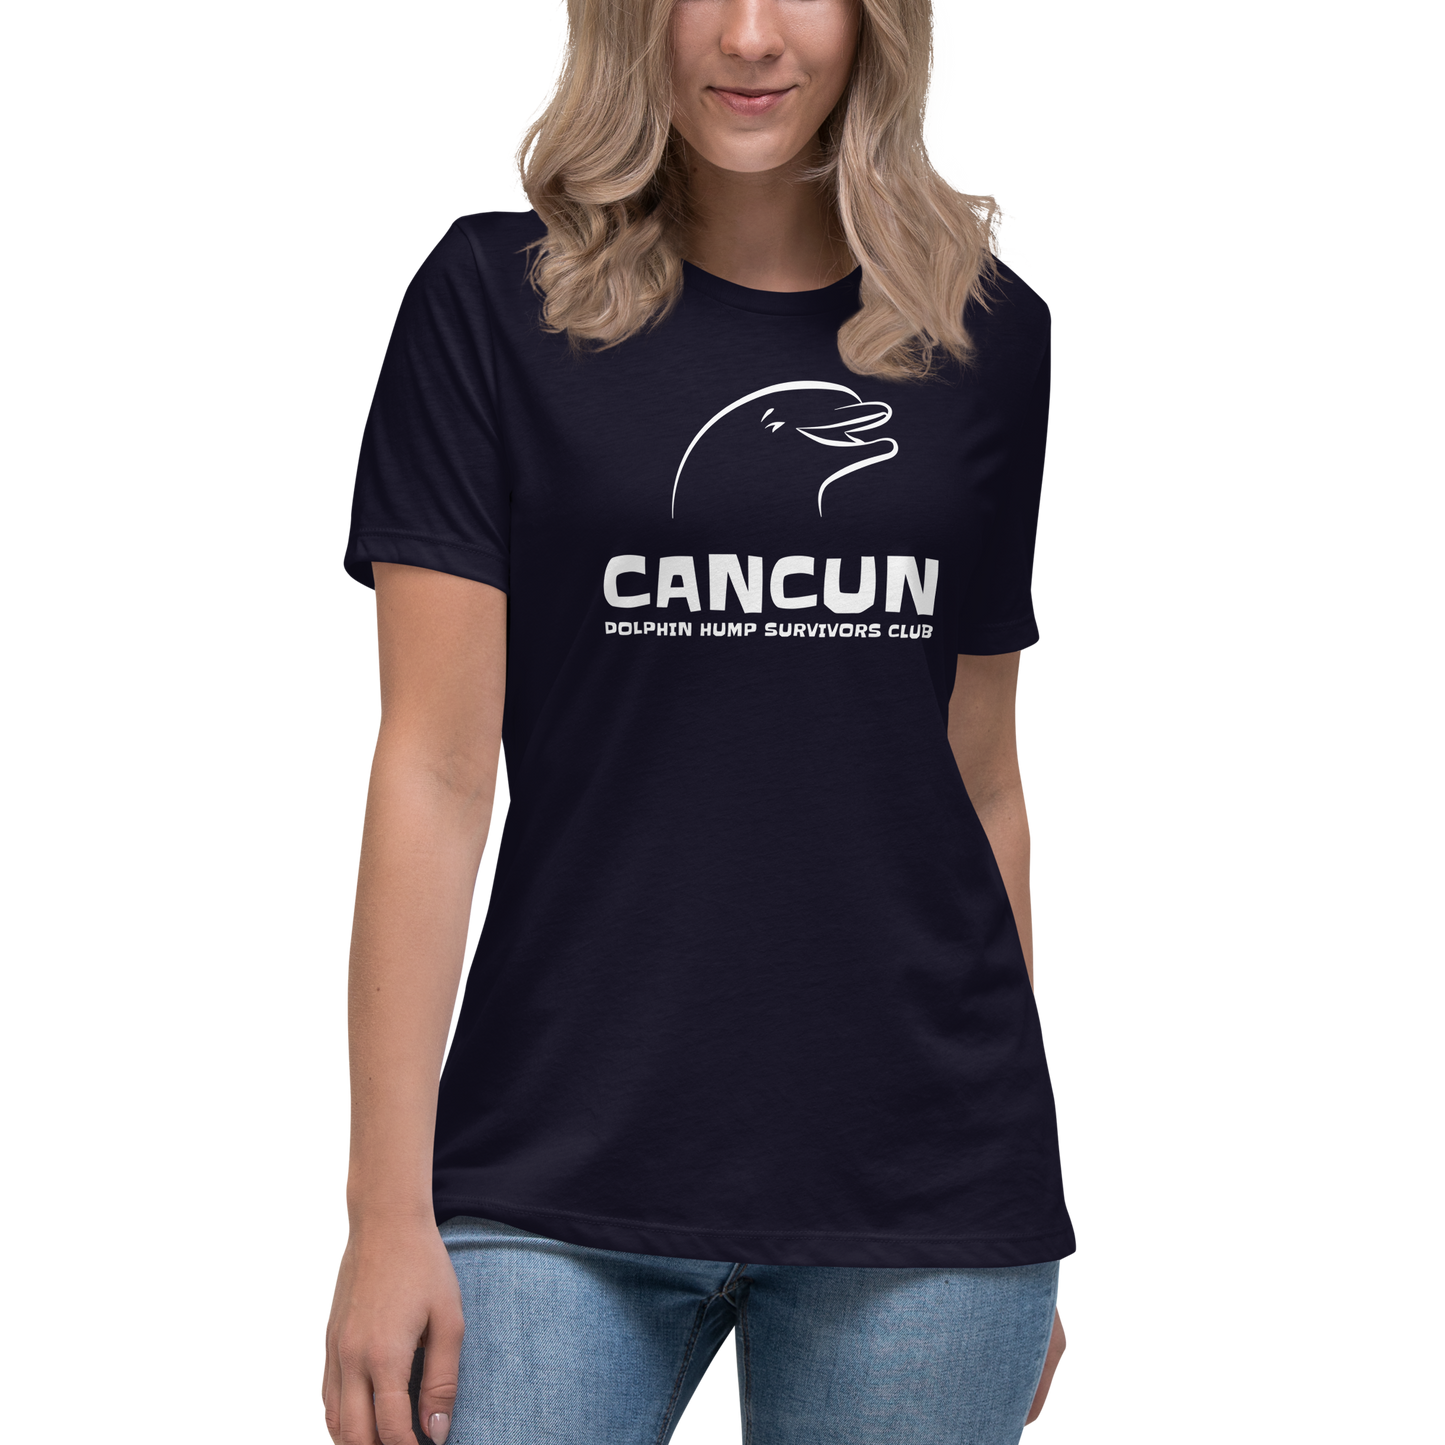 Women's - CANCUN - Dolphin H*mp Survivors Club - Funny T-Shirt